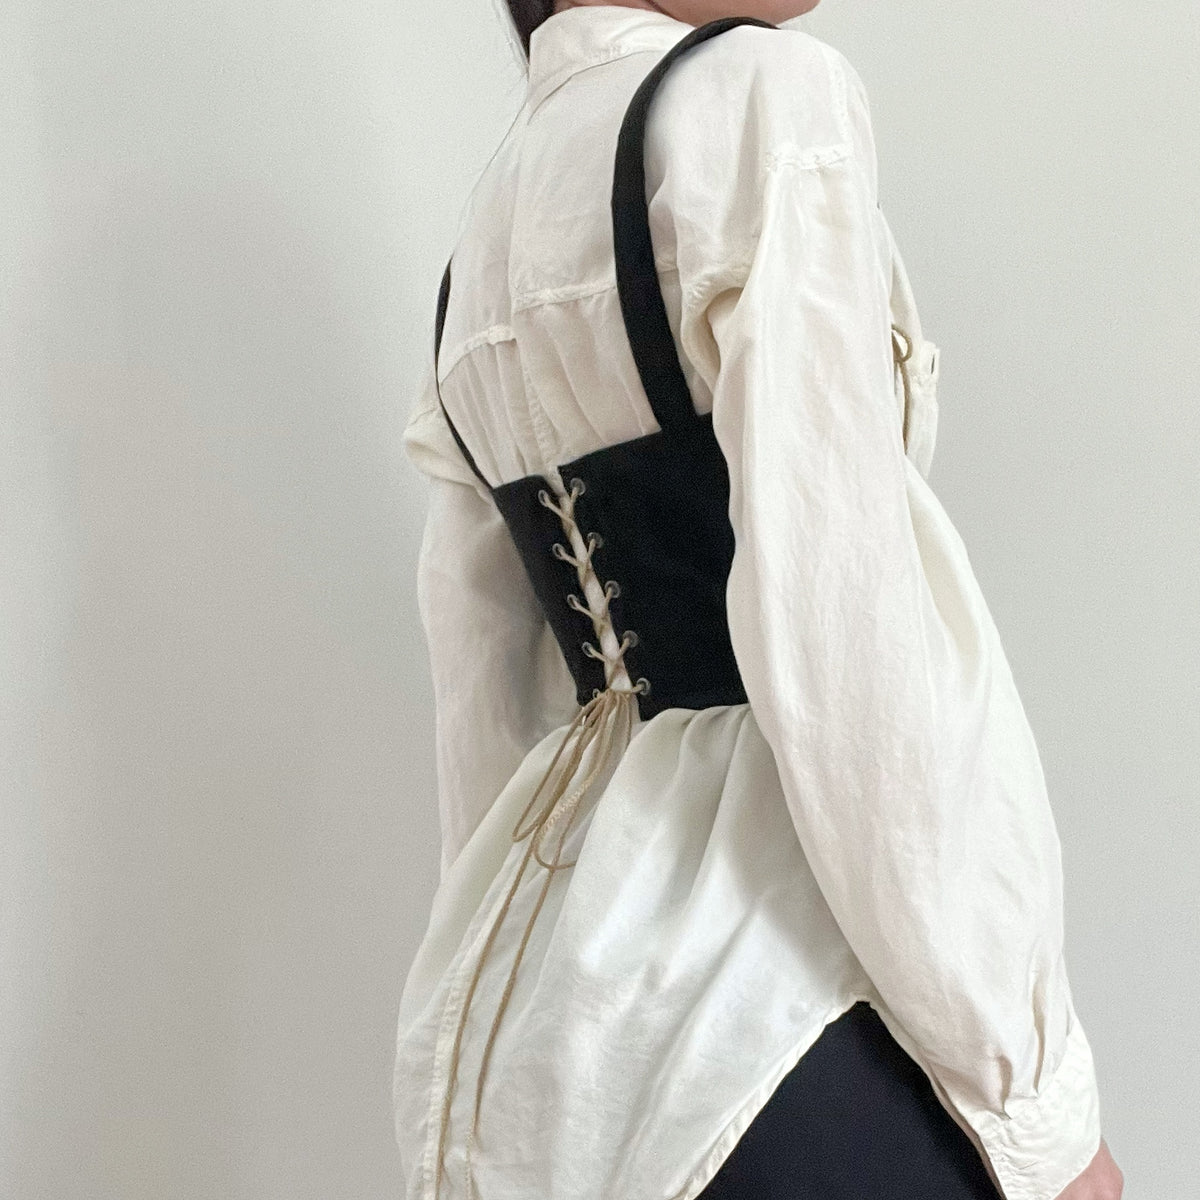 Chanel Corset - 28 For Sale on 1stDibs  chanel corsets, corset  mademoiselle shine, coco chanel corset